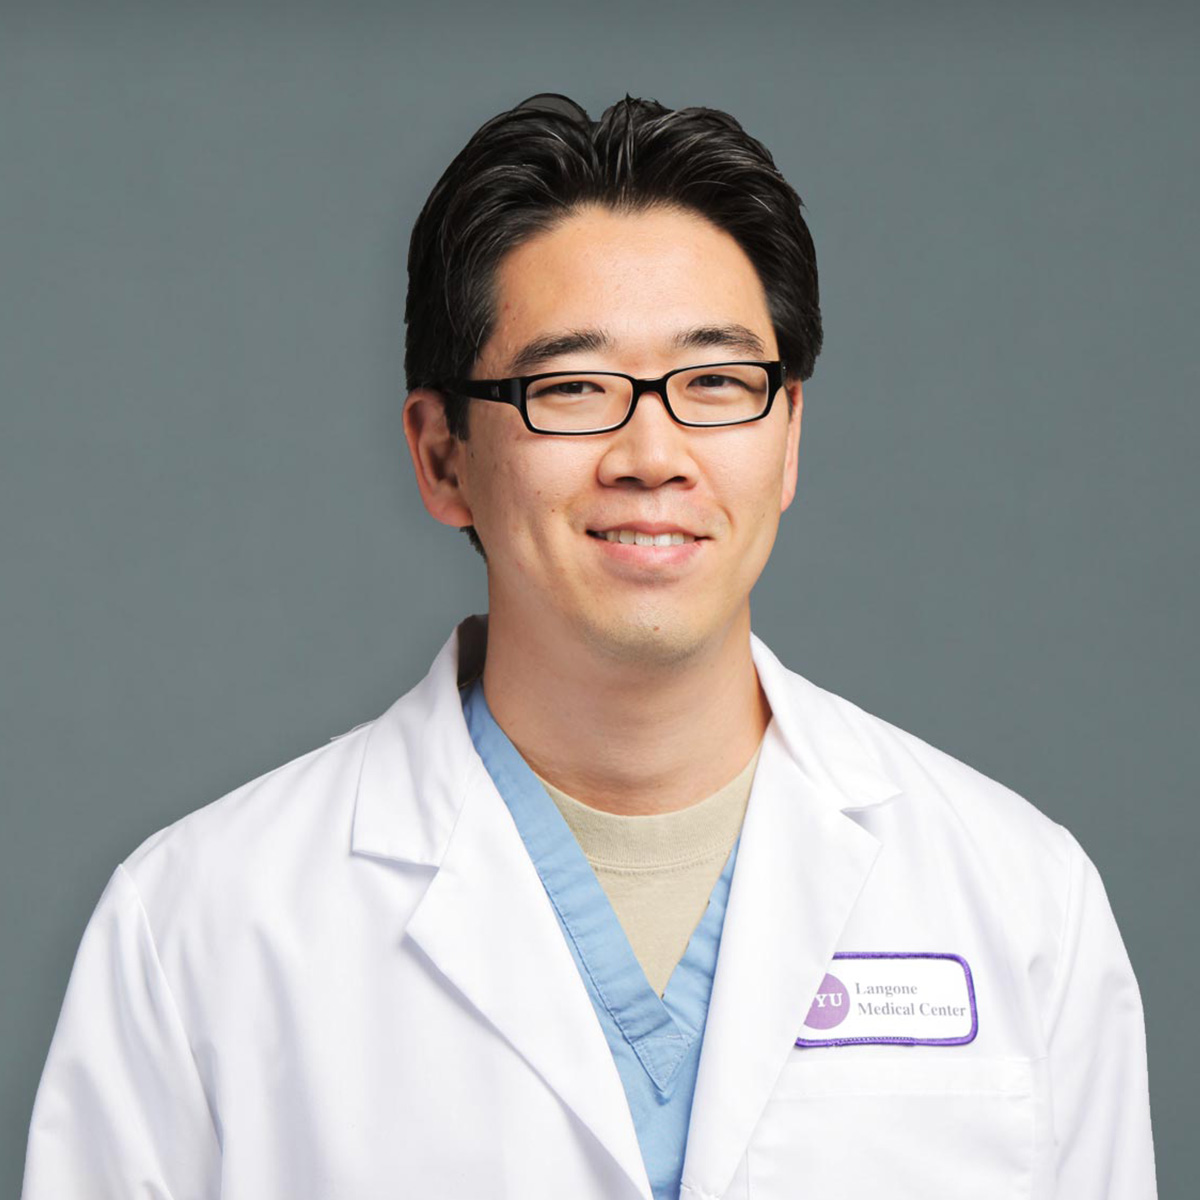 David S. Park,MD. Cardiac Electrophysiology, Cardiology